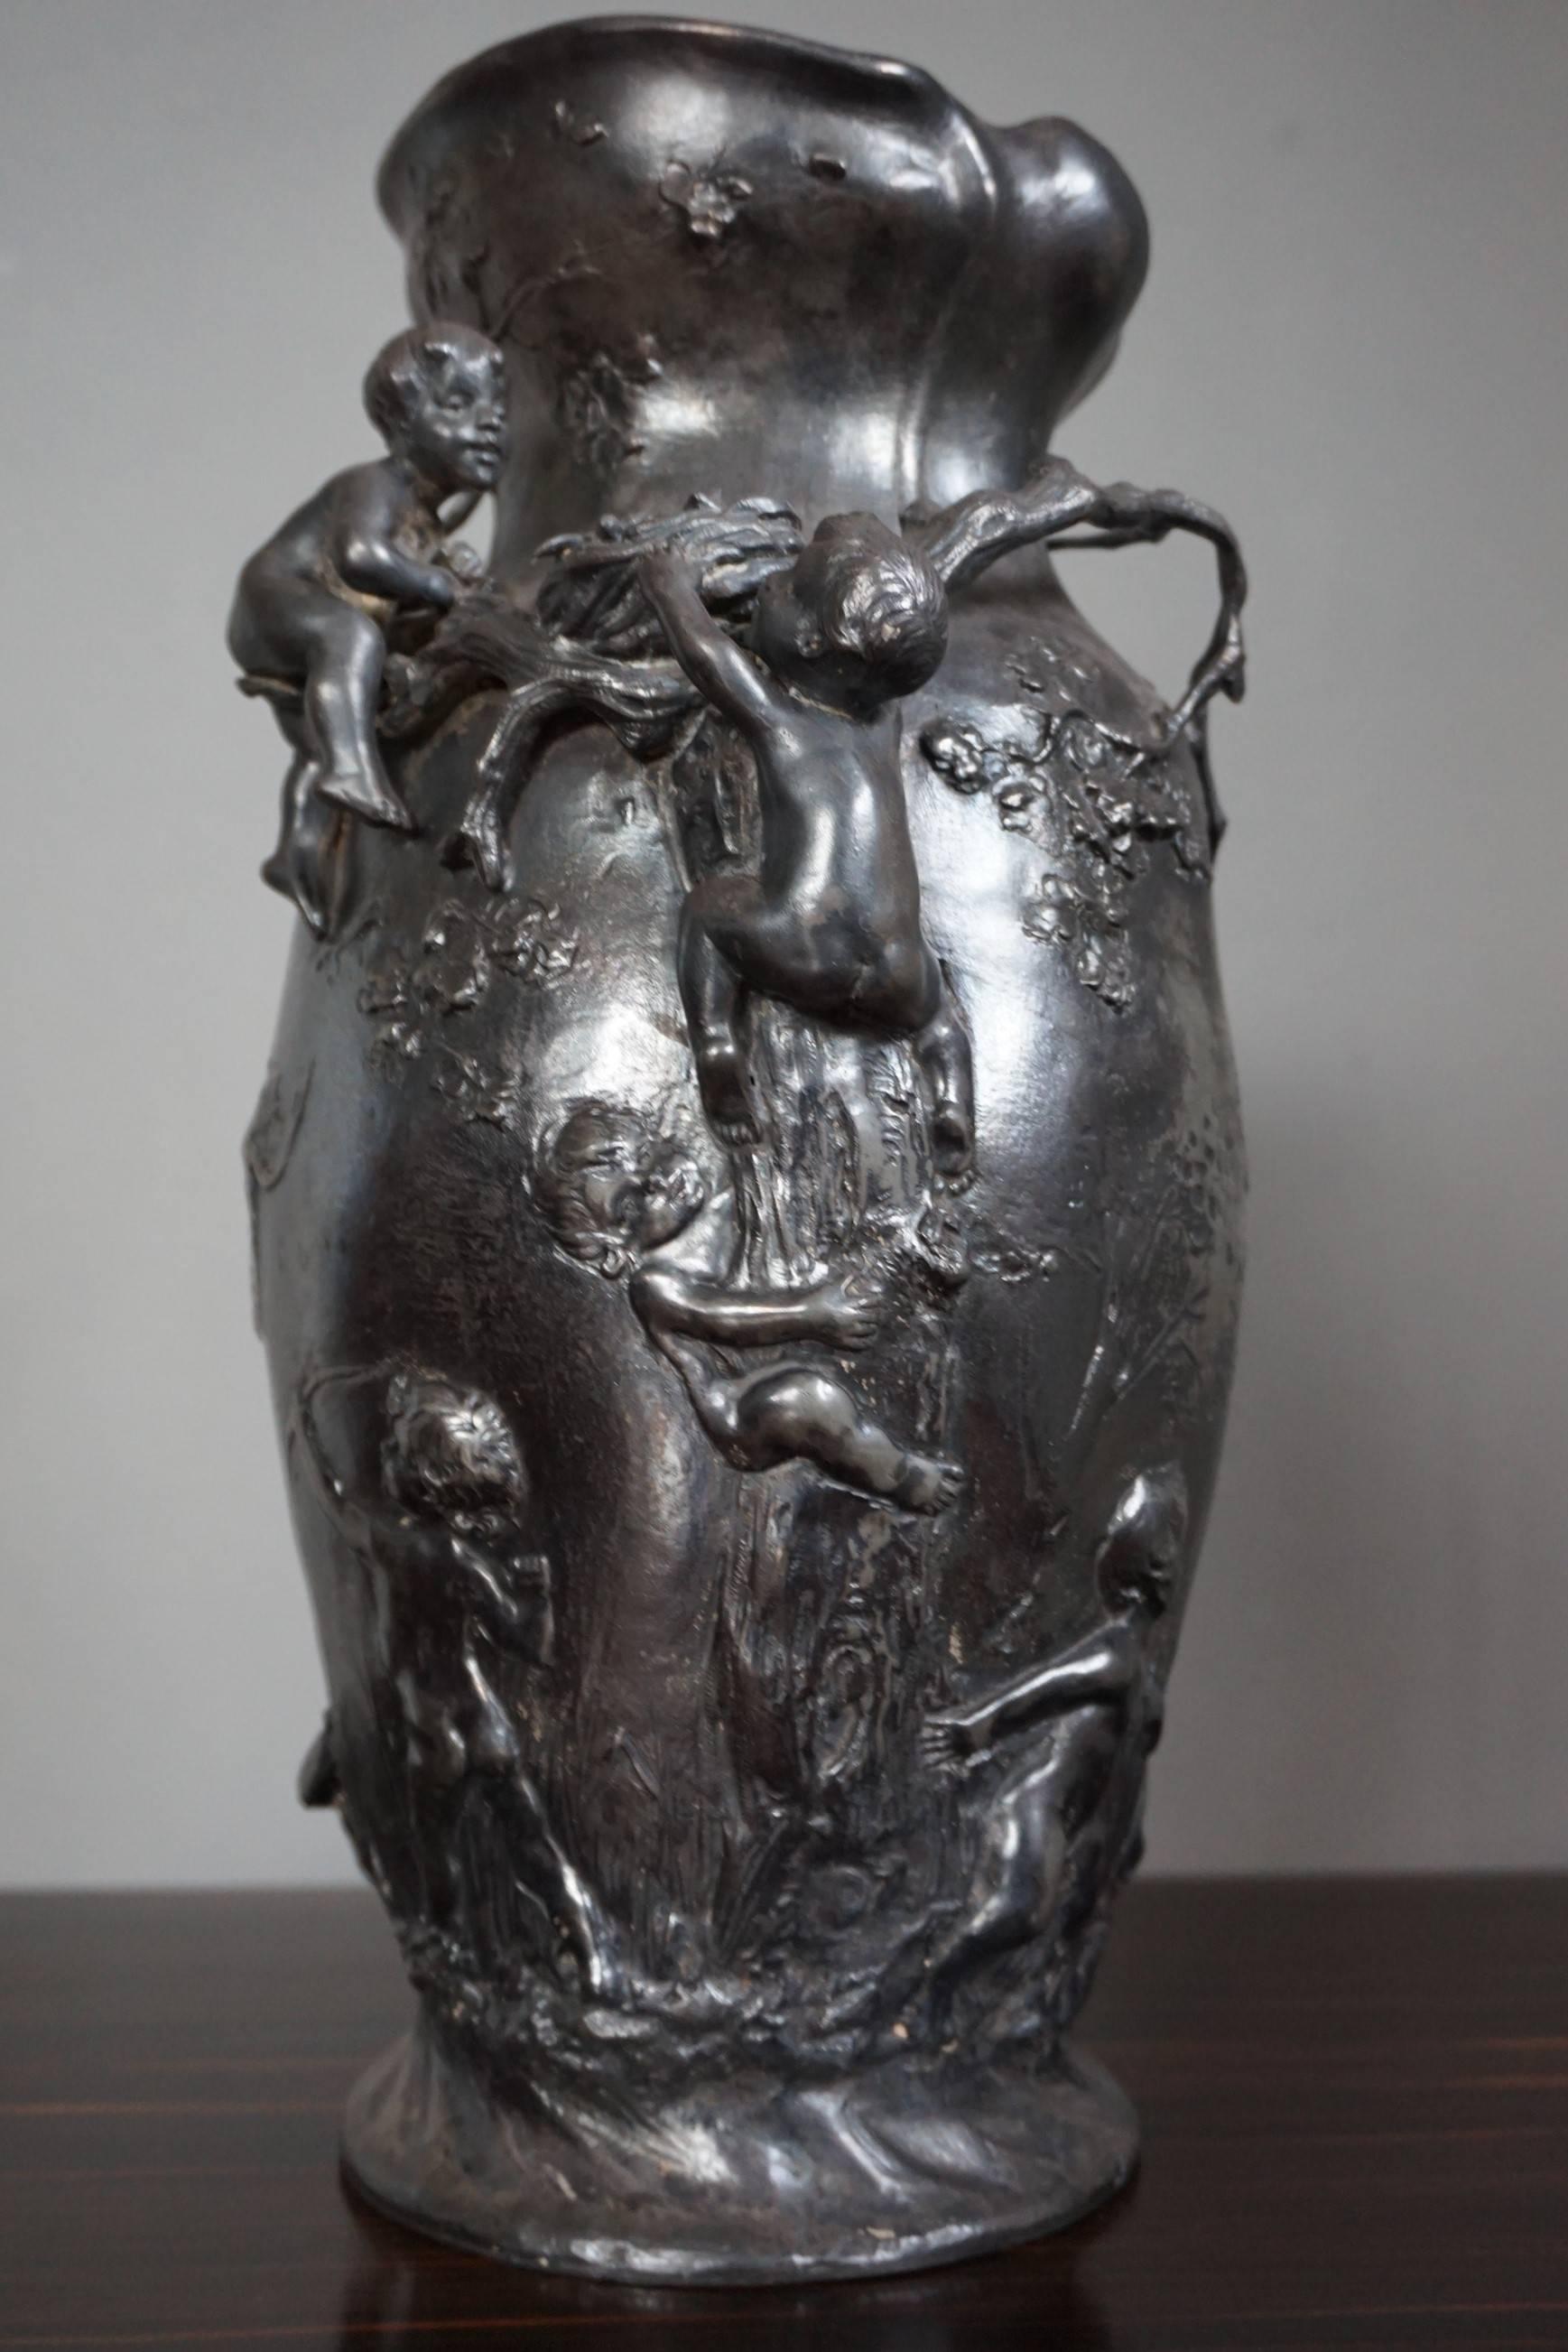 19th Century Amazing Workmanship Antique Pewter Vase Cherubs Exploring and Hunting Nature